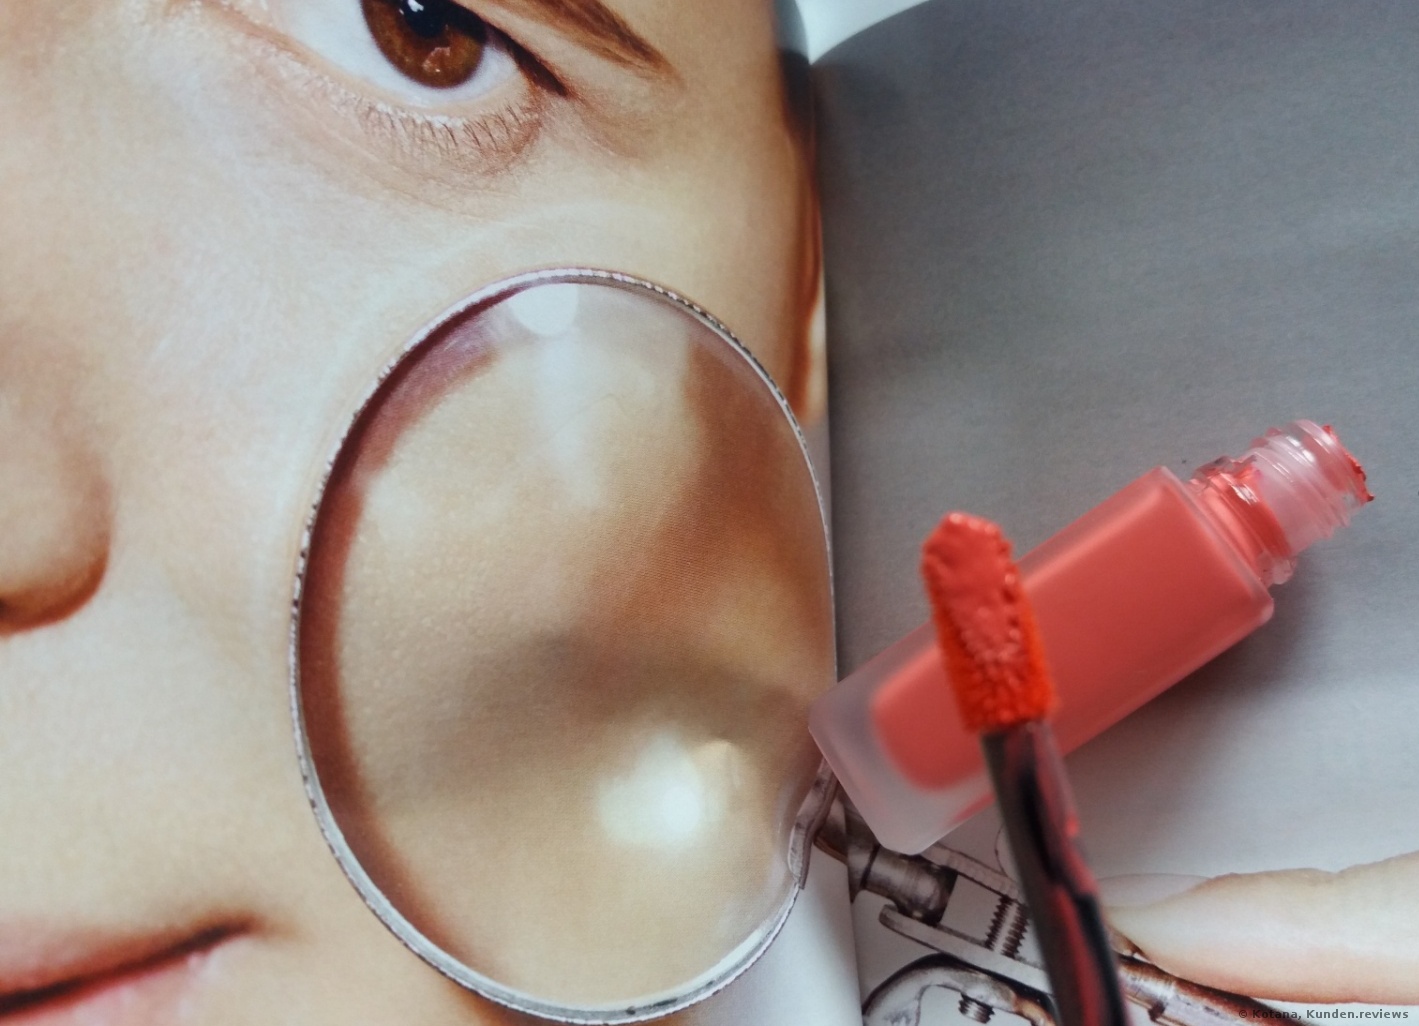  Chanel Rouge Allure Ink Fluid-Lippenstift # 142 Creatif 